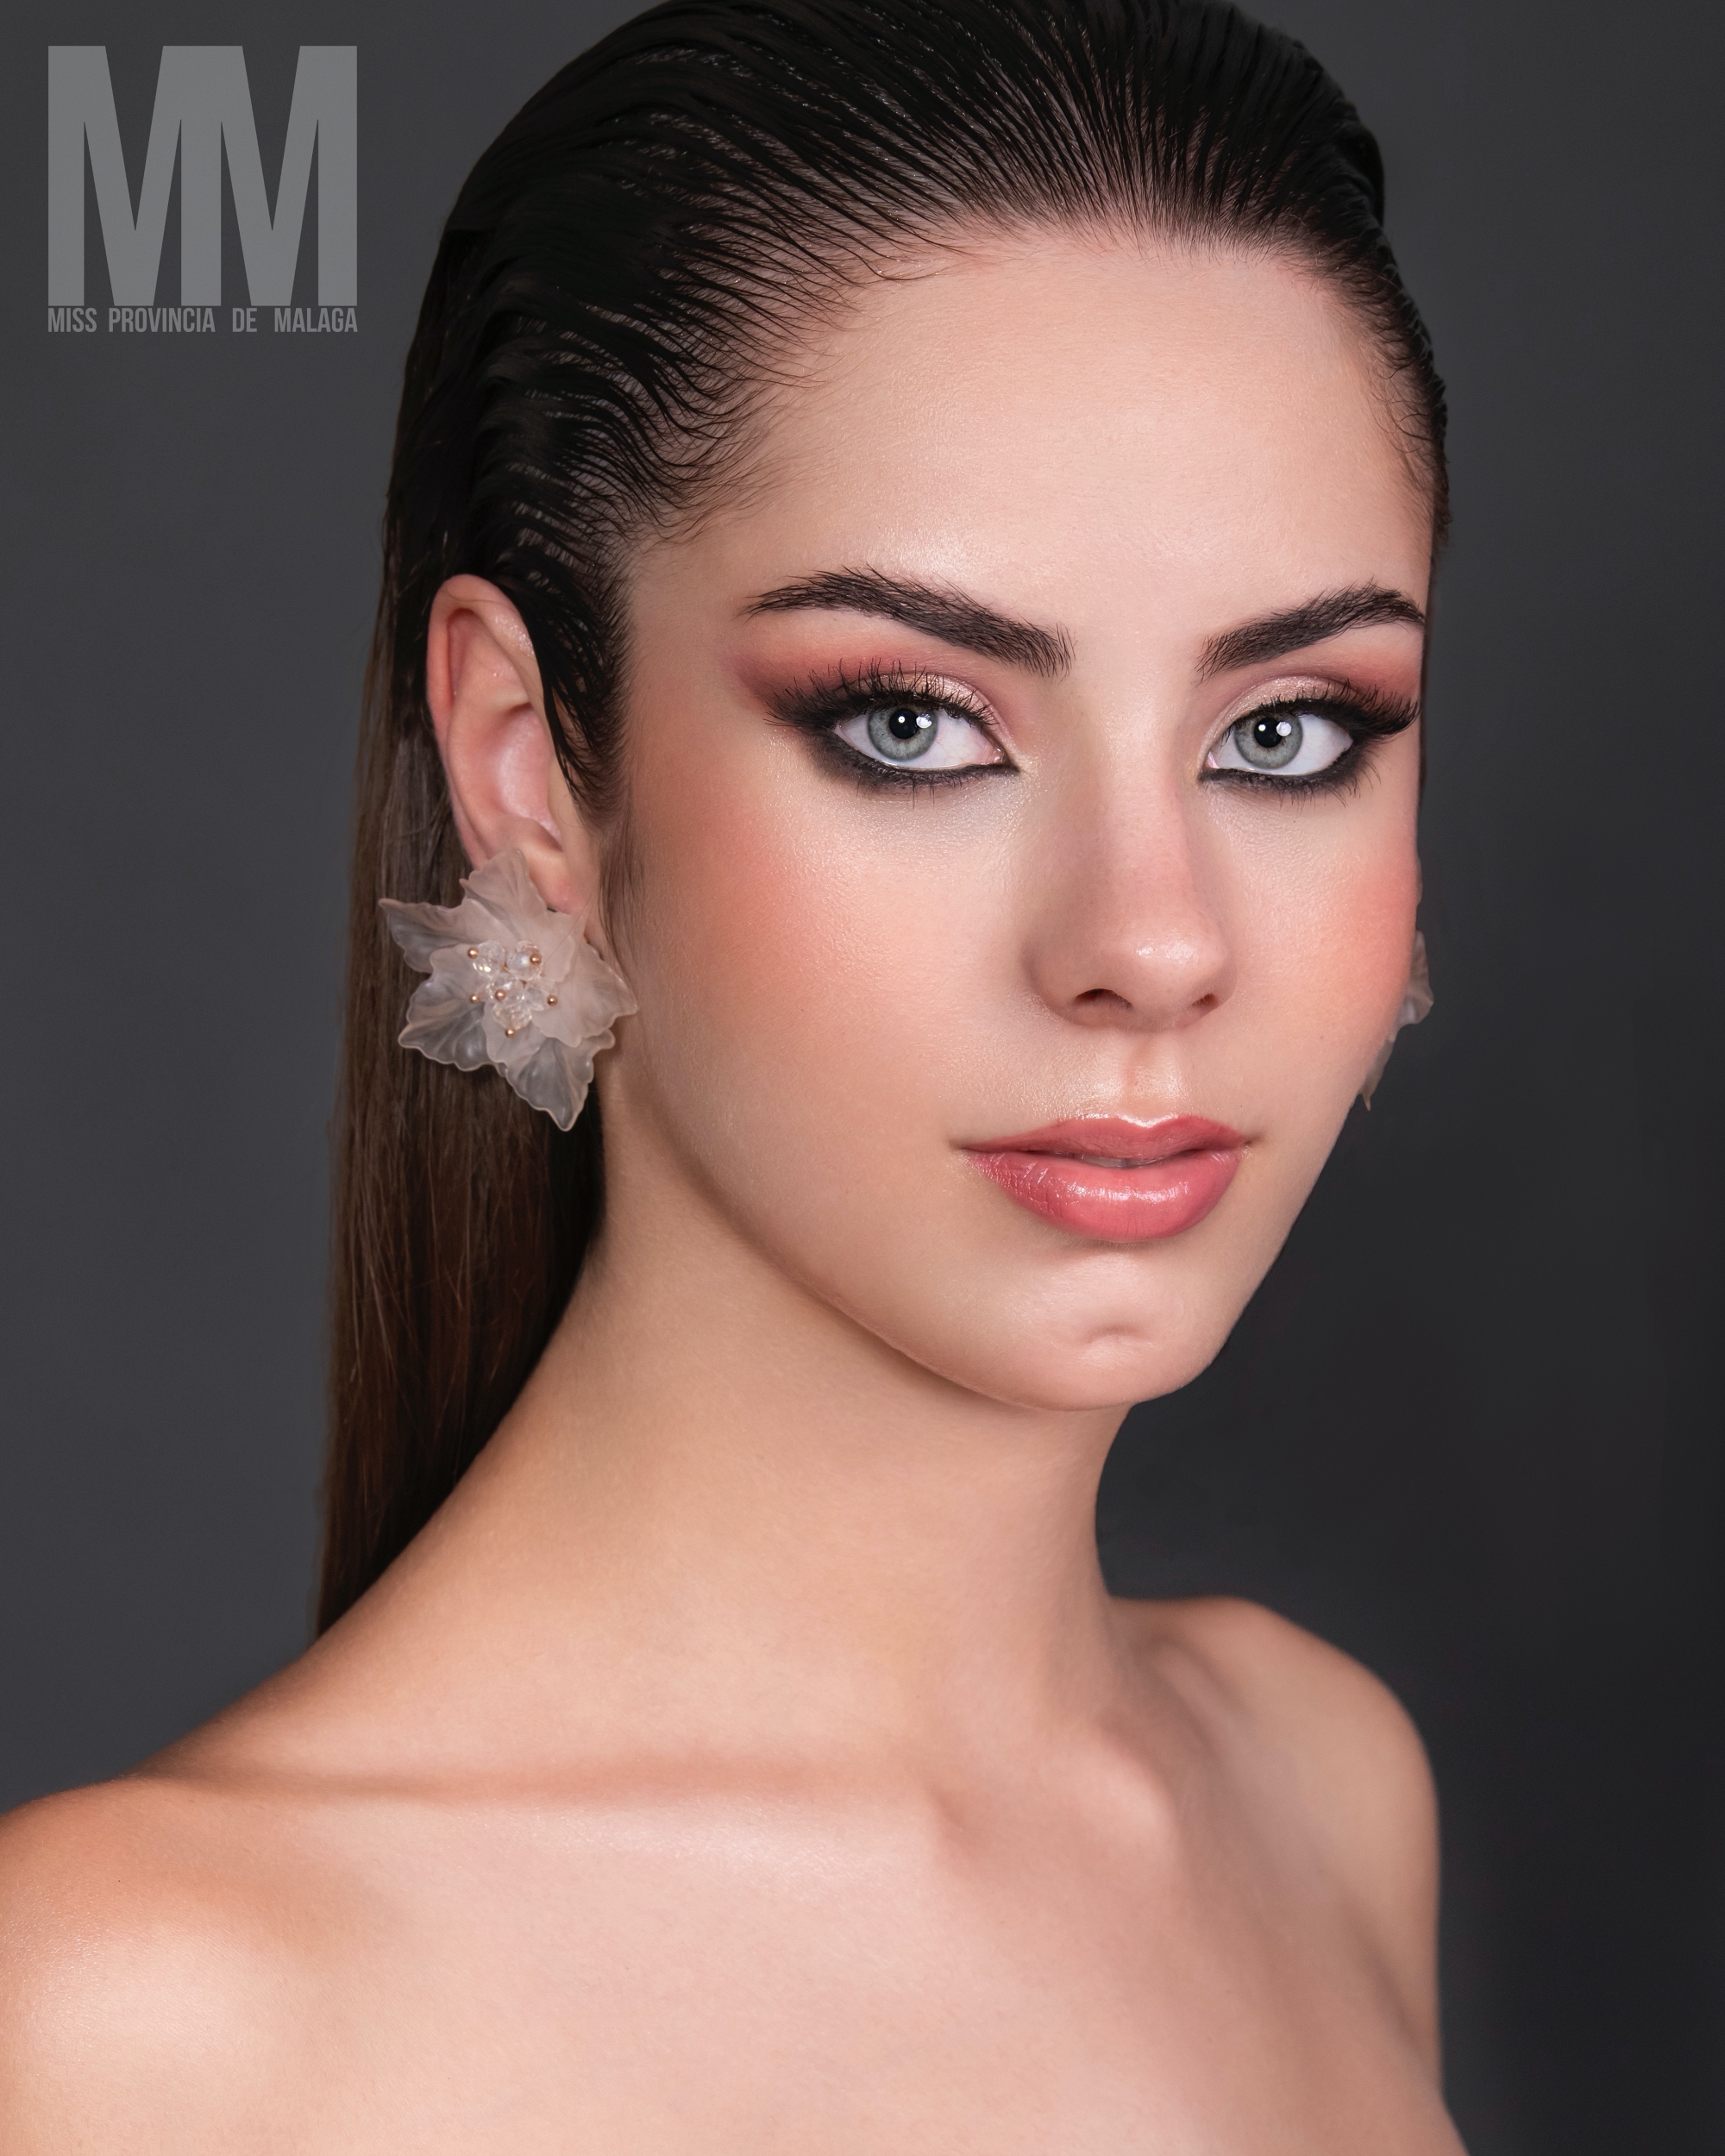 Miss Provincia de Malaga 2022 MISS GENALGUACIL Covadonga Gomez 1